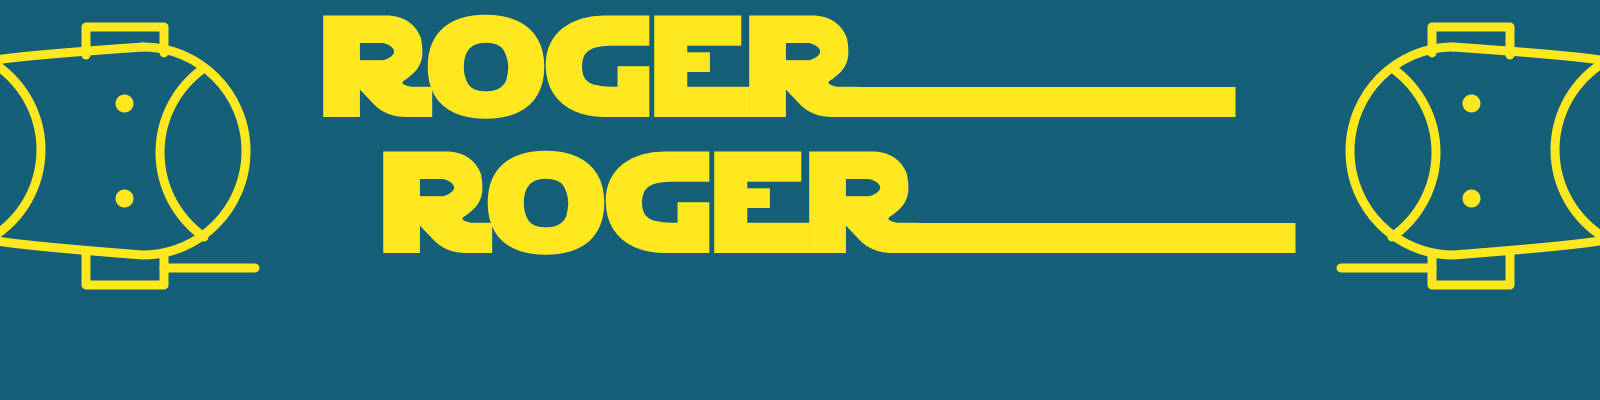 Roger Roger: A Star Wars Podcast